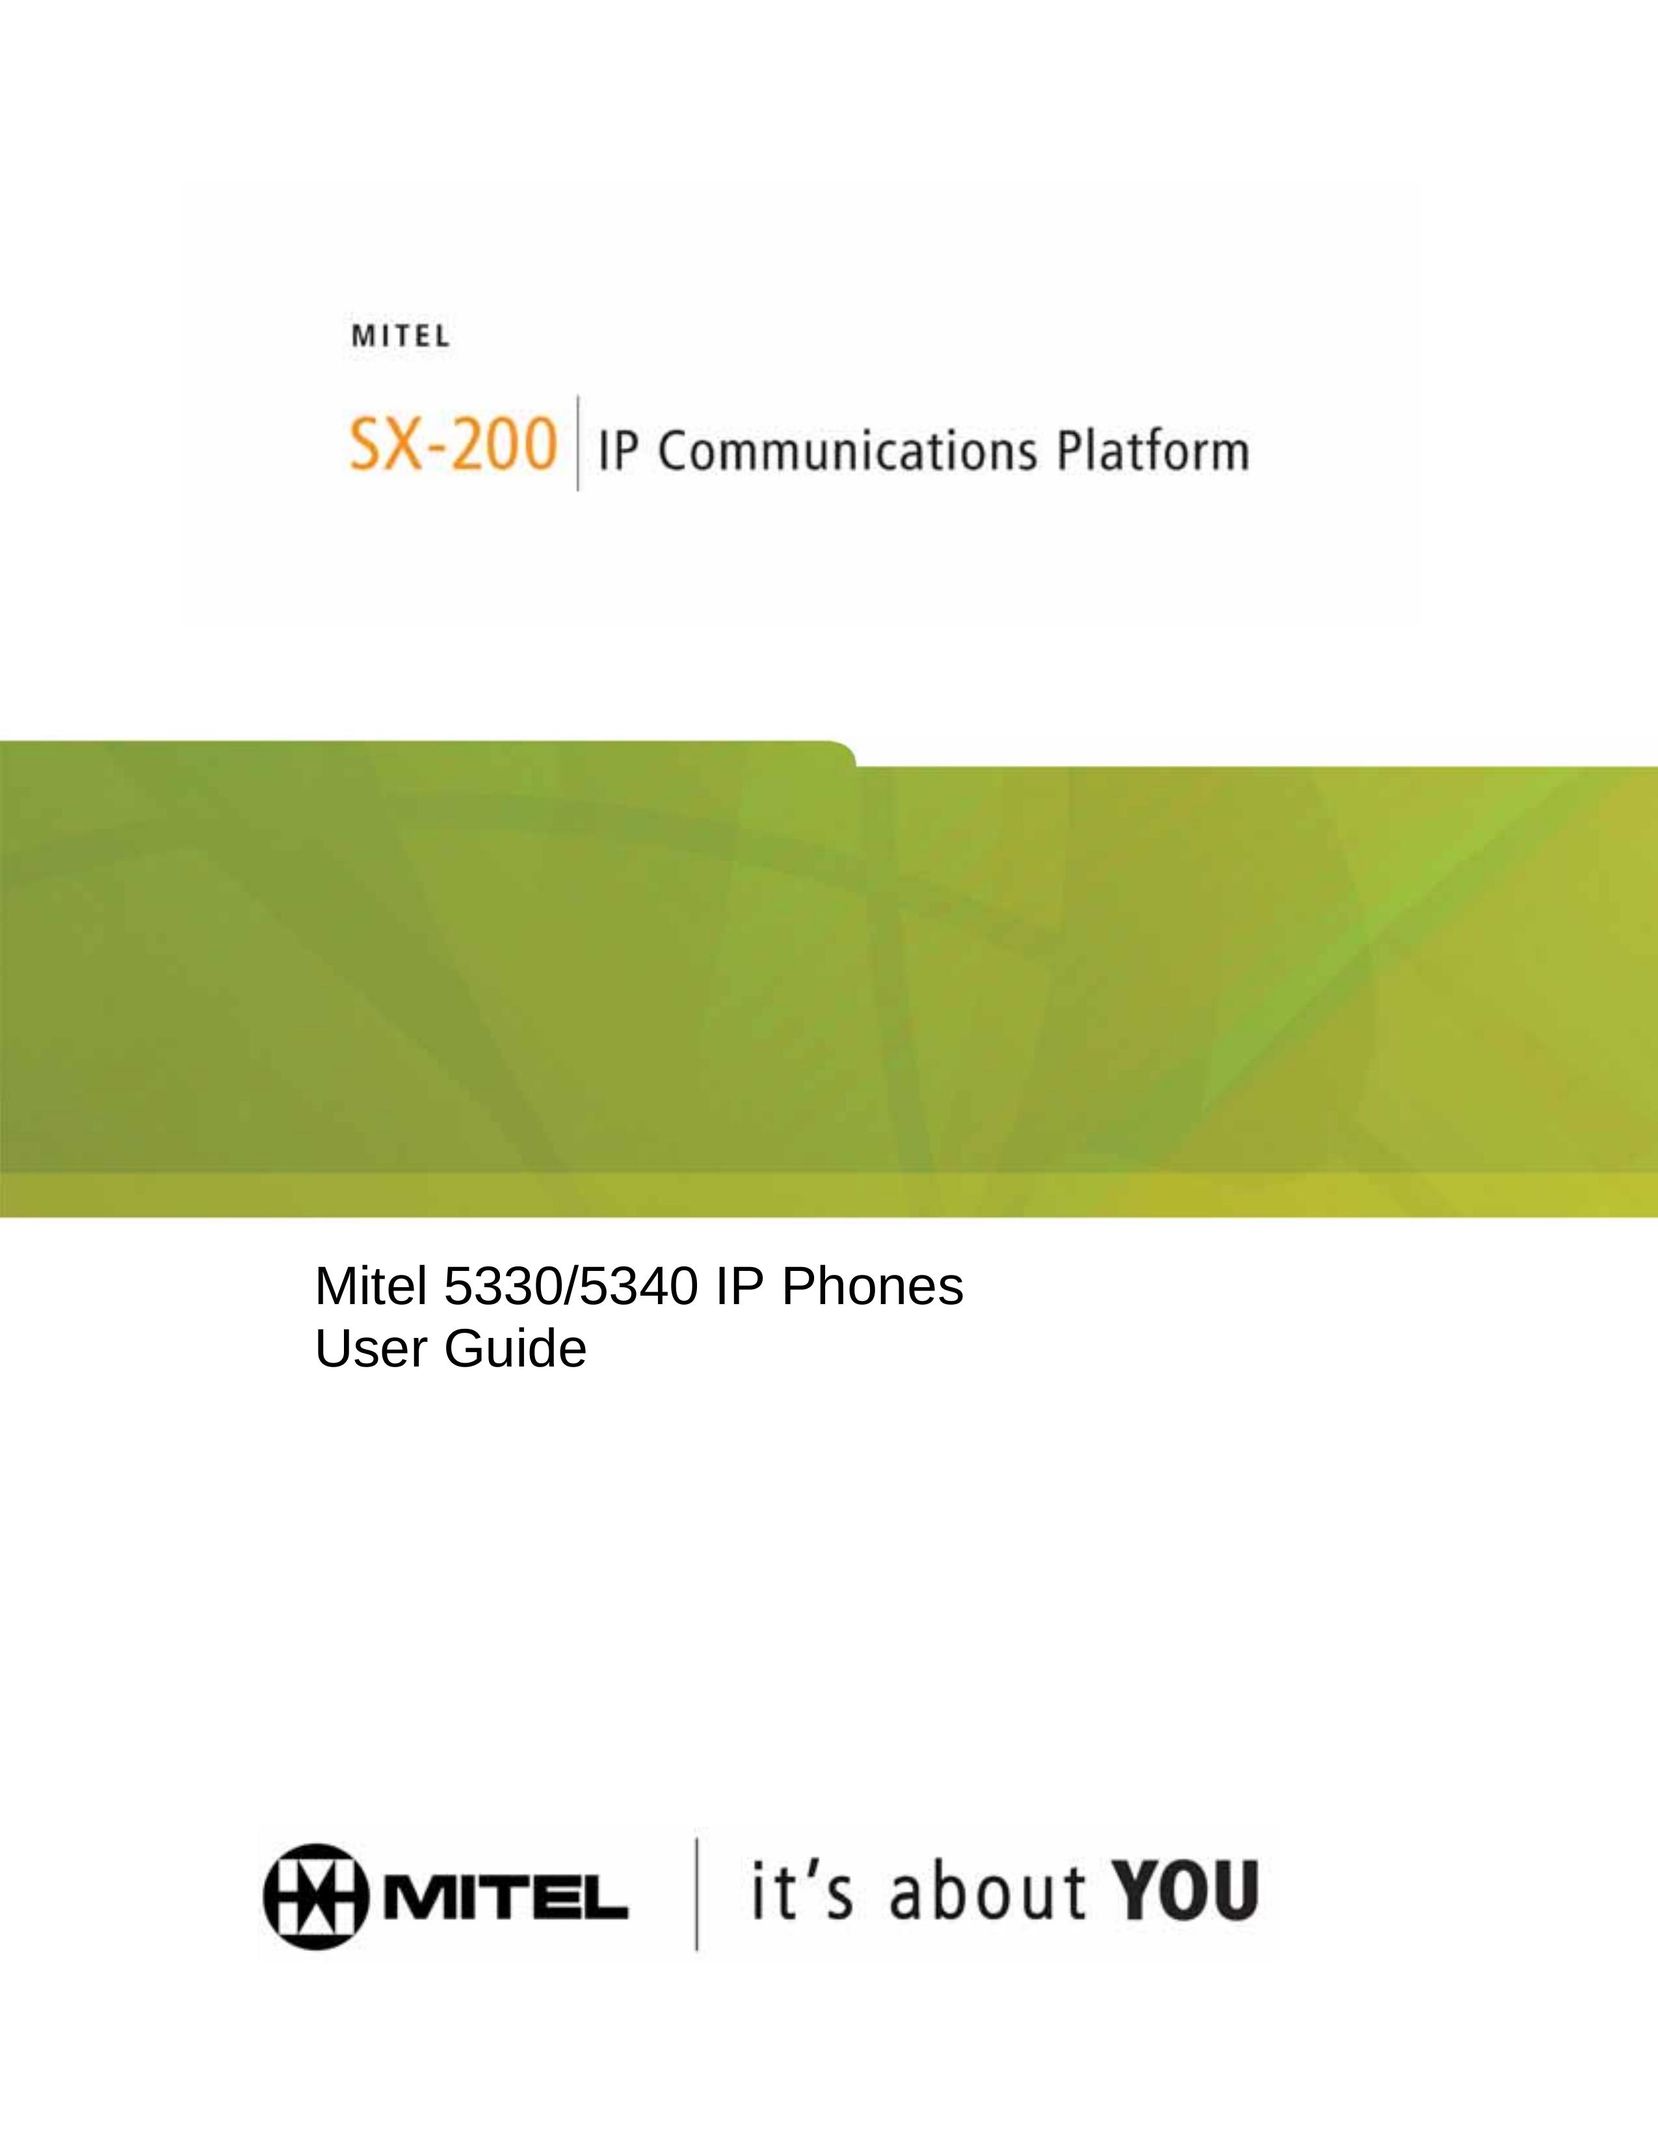 Mitel 5330/5340 Telephone User Manual